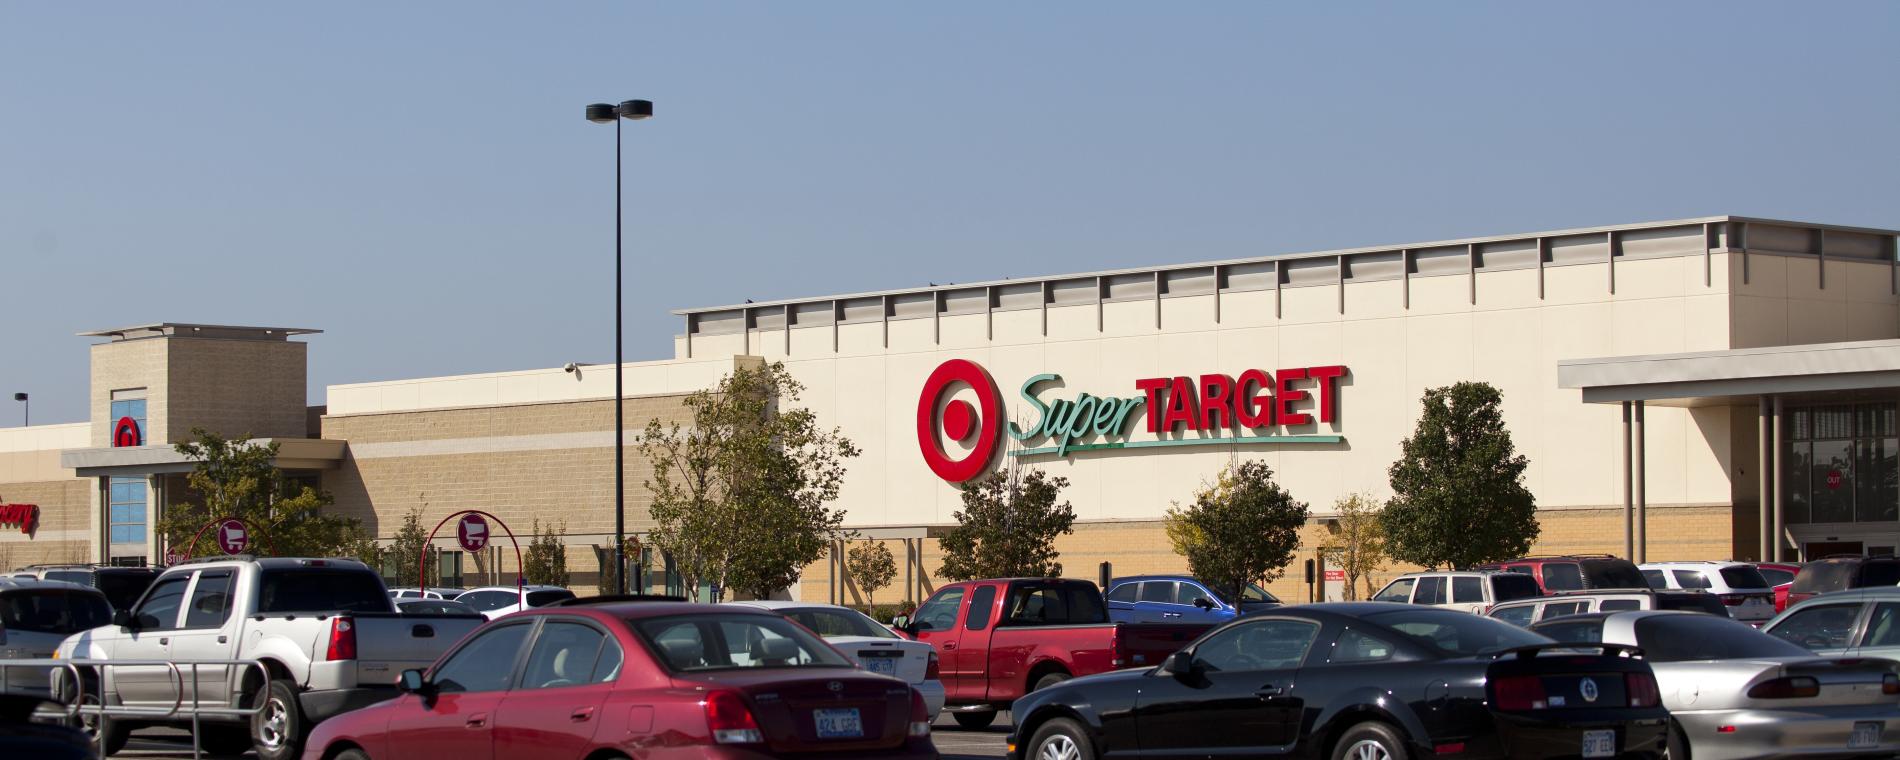 NewMarket Super Target Visit Wichita